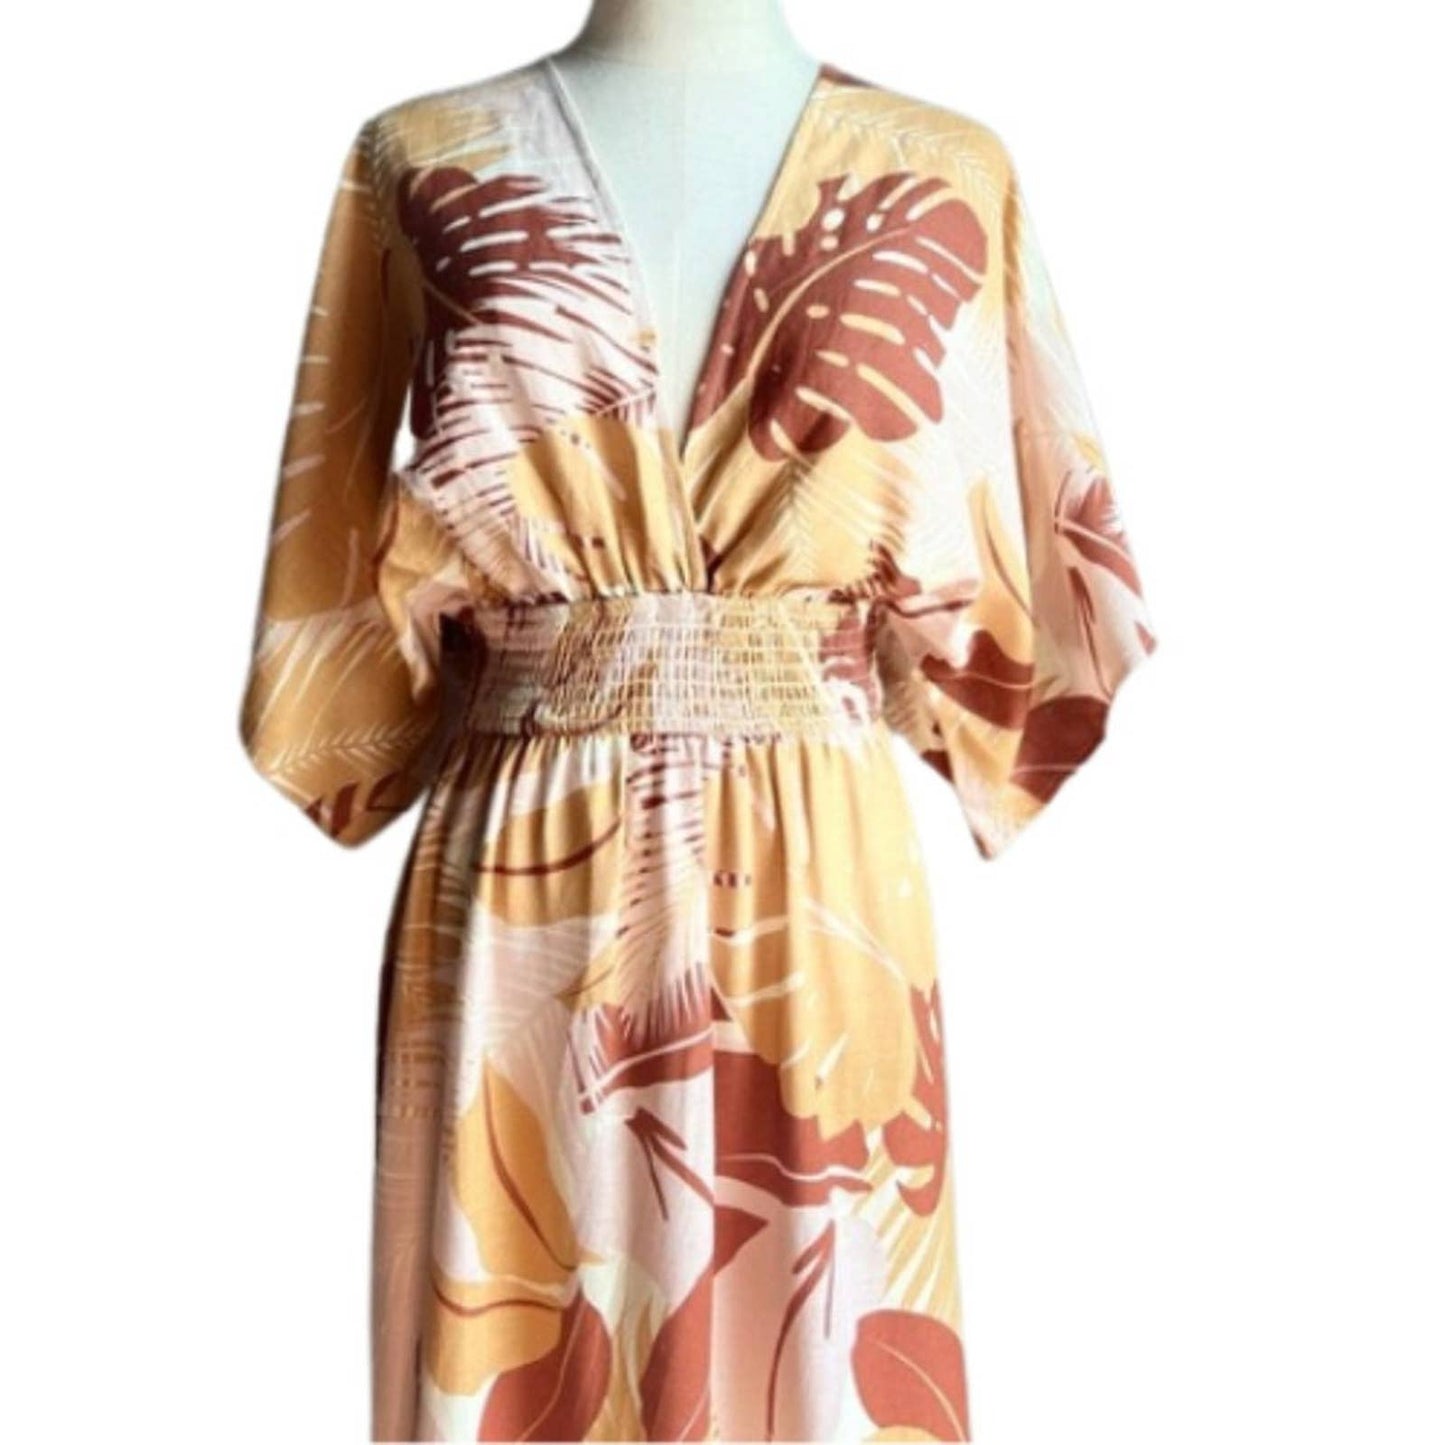 L*Space Sungazer Maxi Dress in Tropical Bronze NWT Size Small